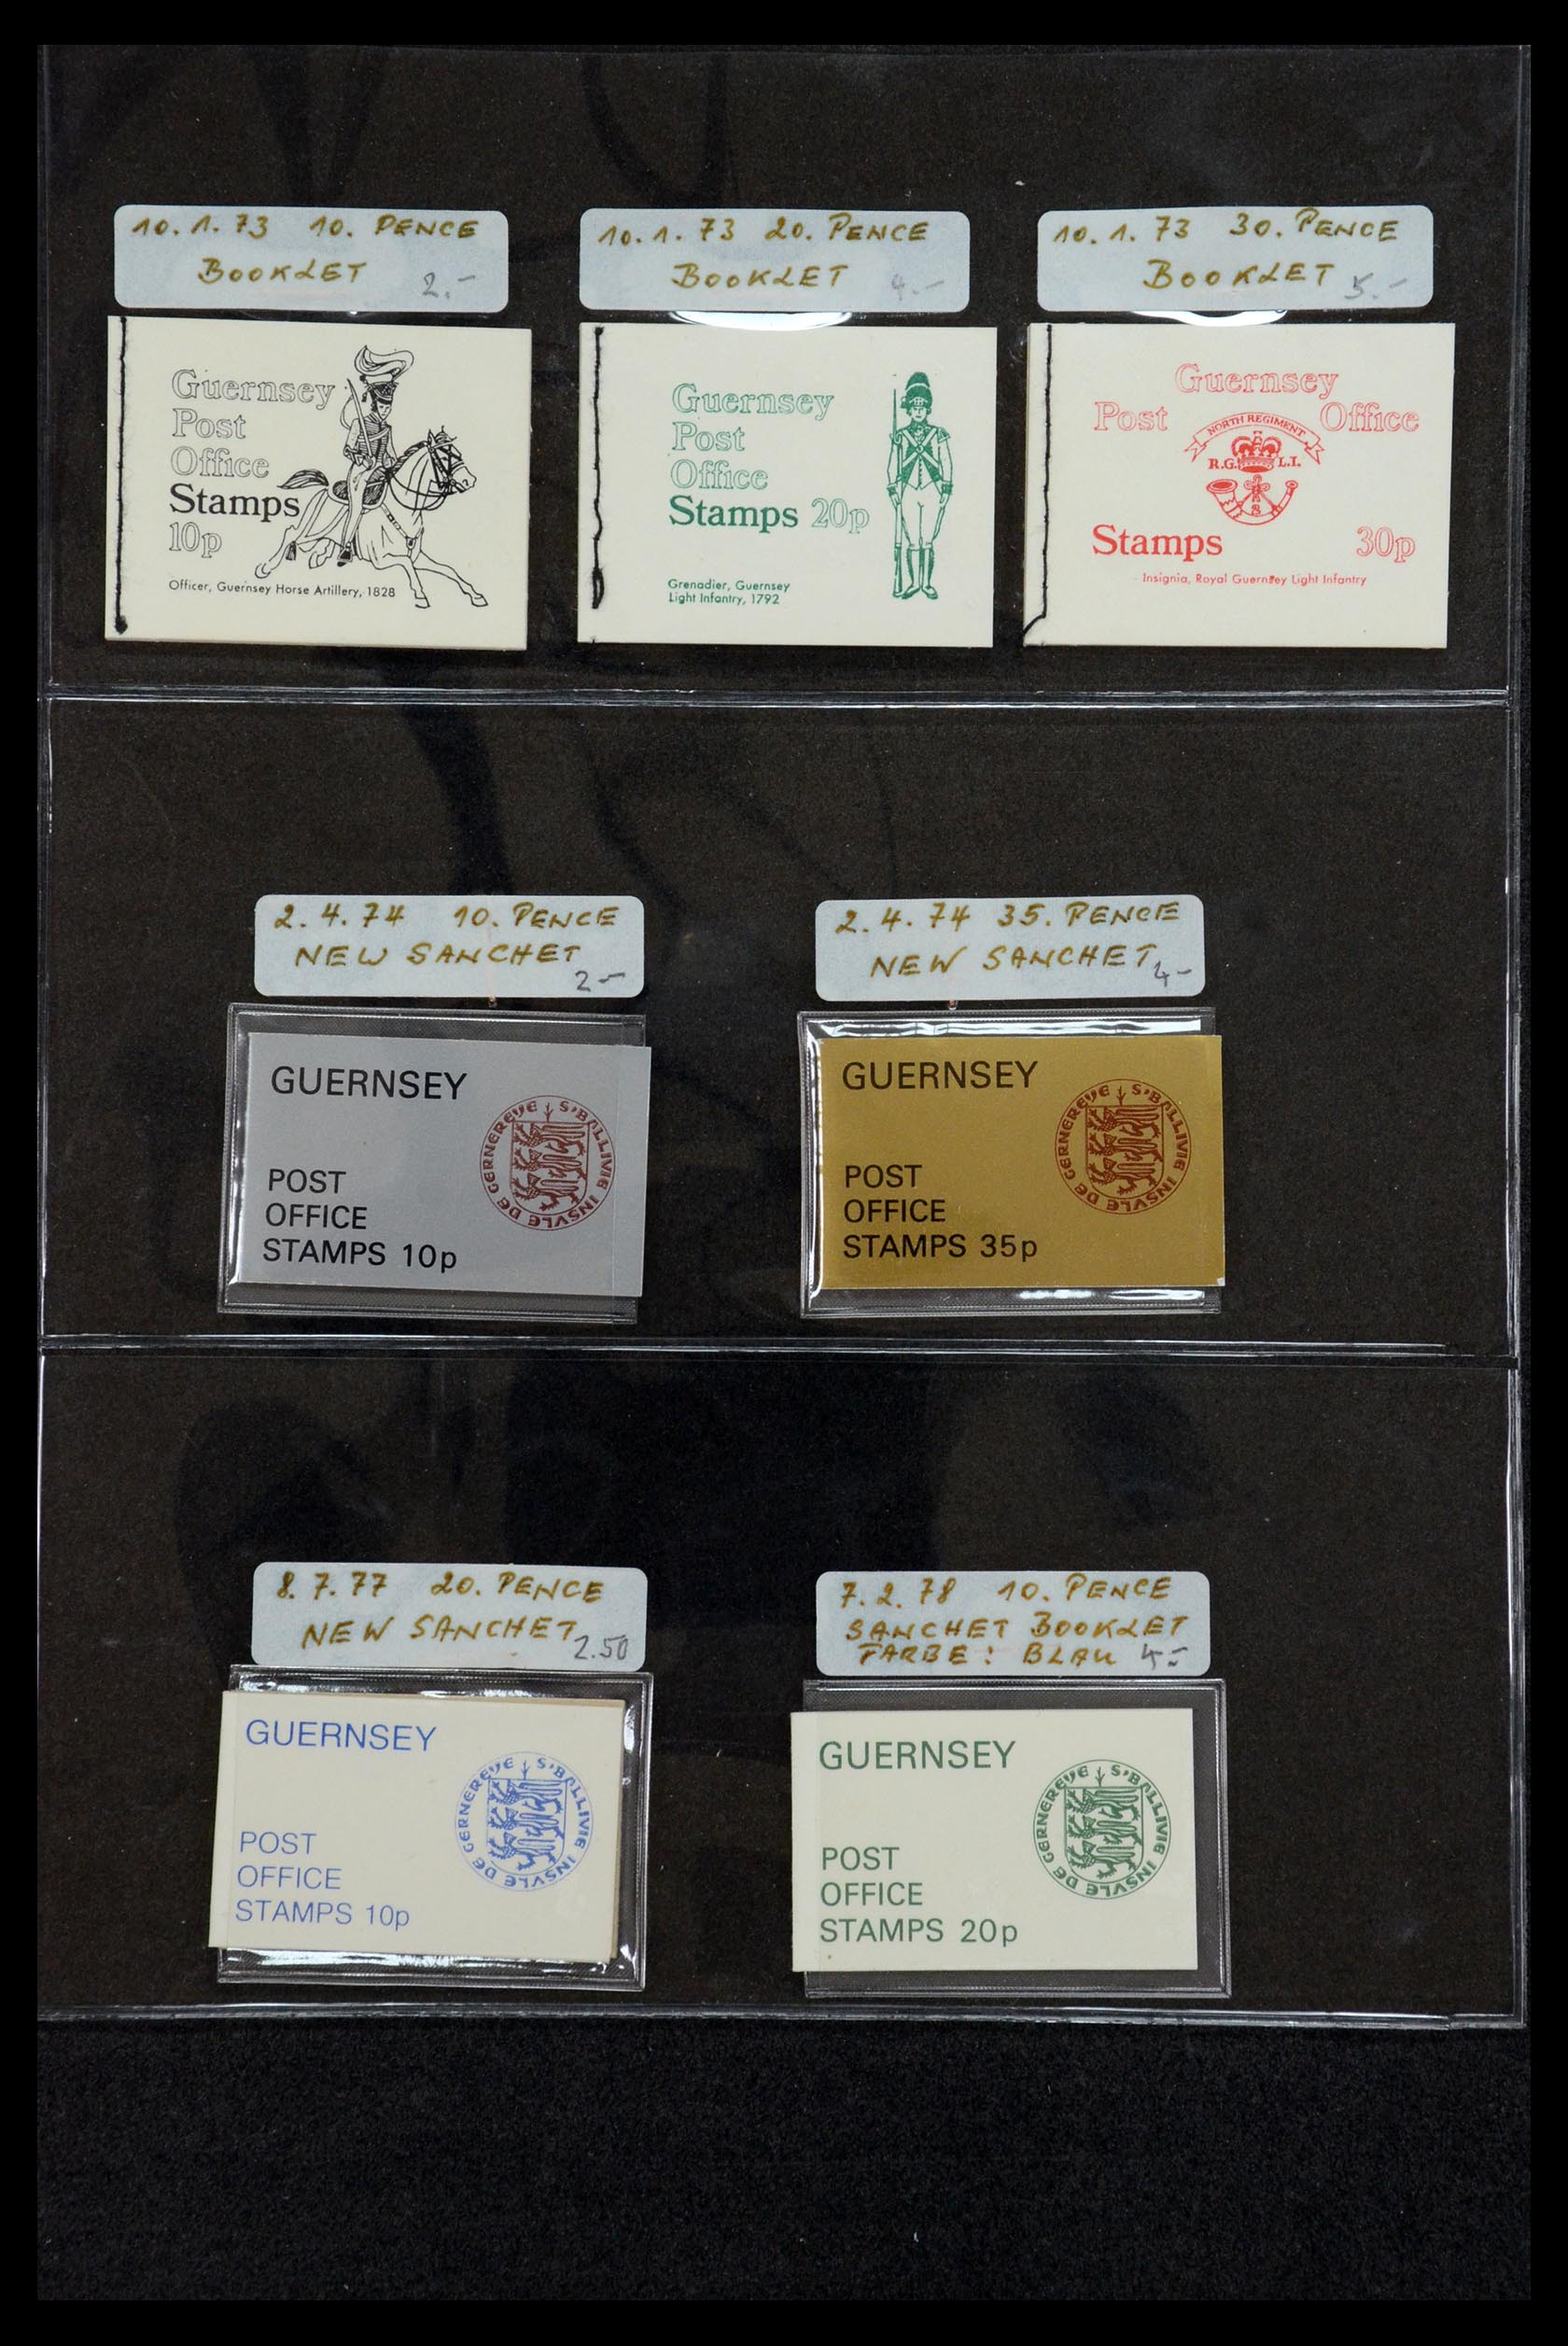 35976 002 - Stamp collection 35976 Guernsey and Alderney stamp booklets 1969-2015!